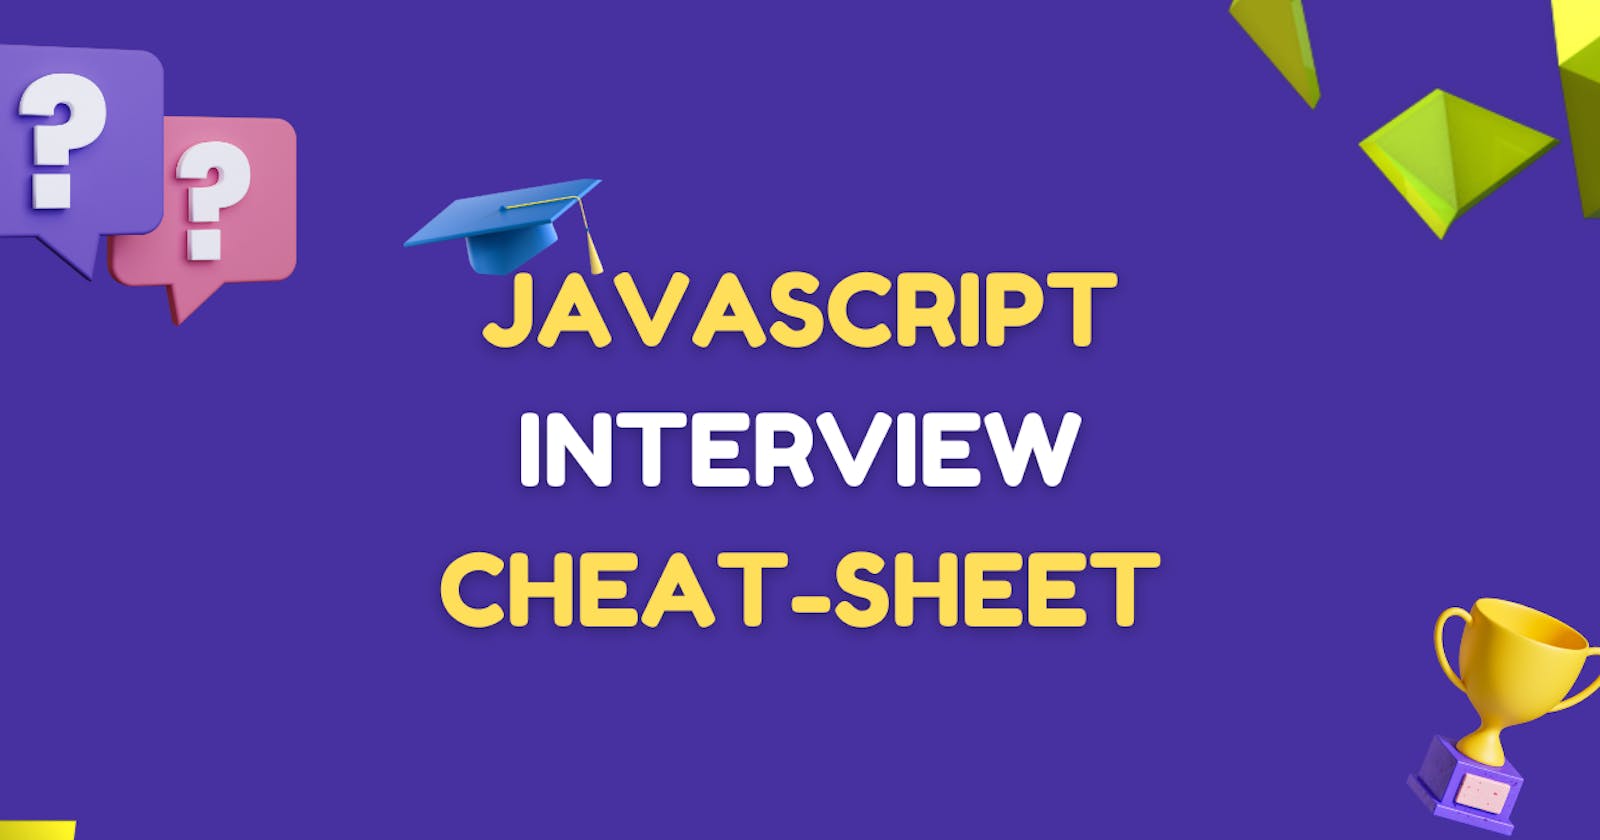 Javascript Interview Cheat-Sheet